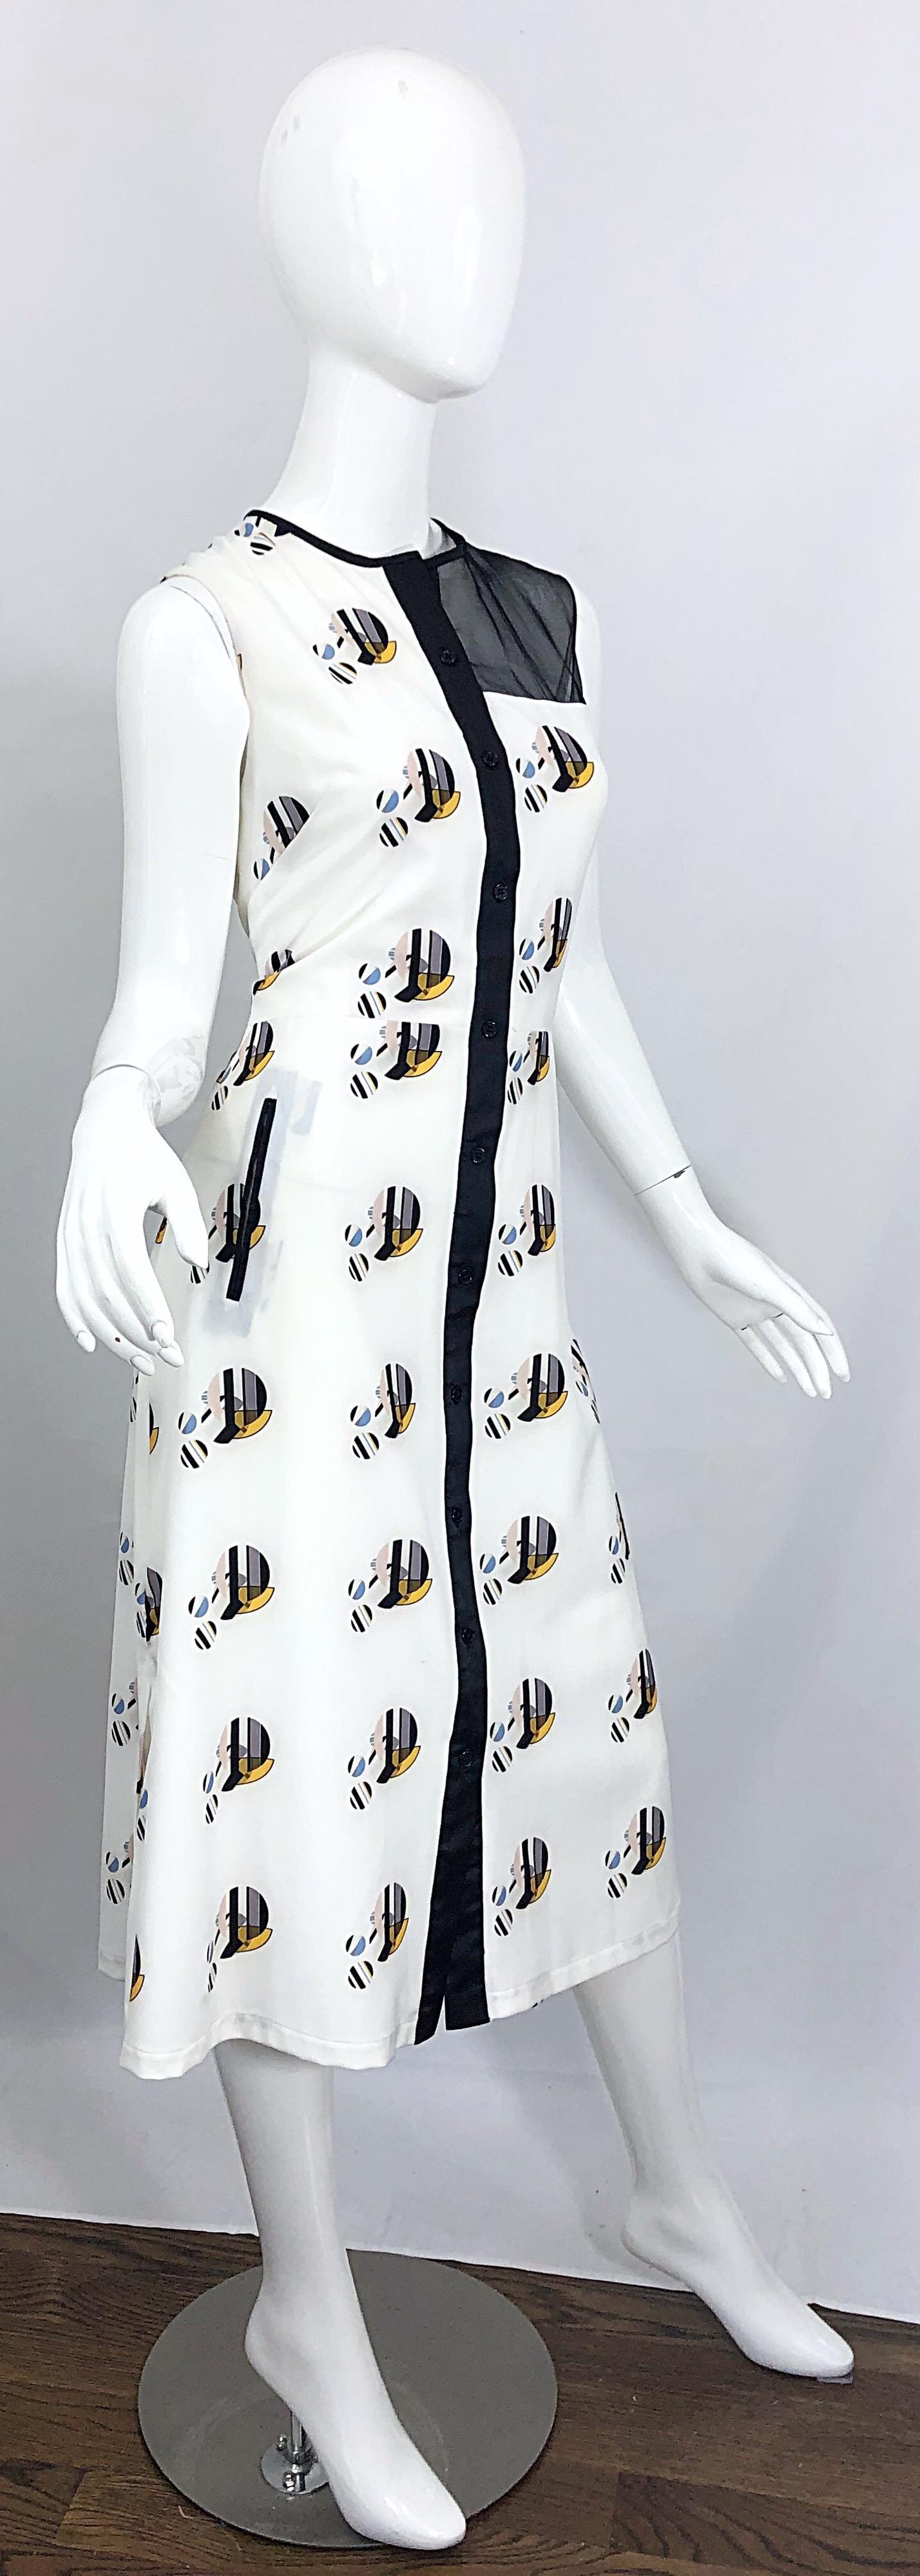 New Bibhu Mohapatra Abstract Print White and Black Silk Sleeveless Shirt Dress 4